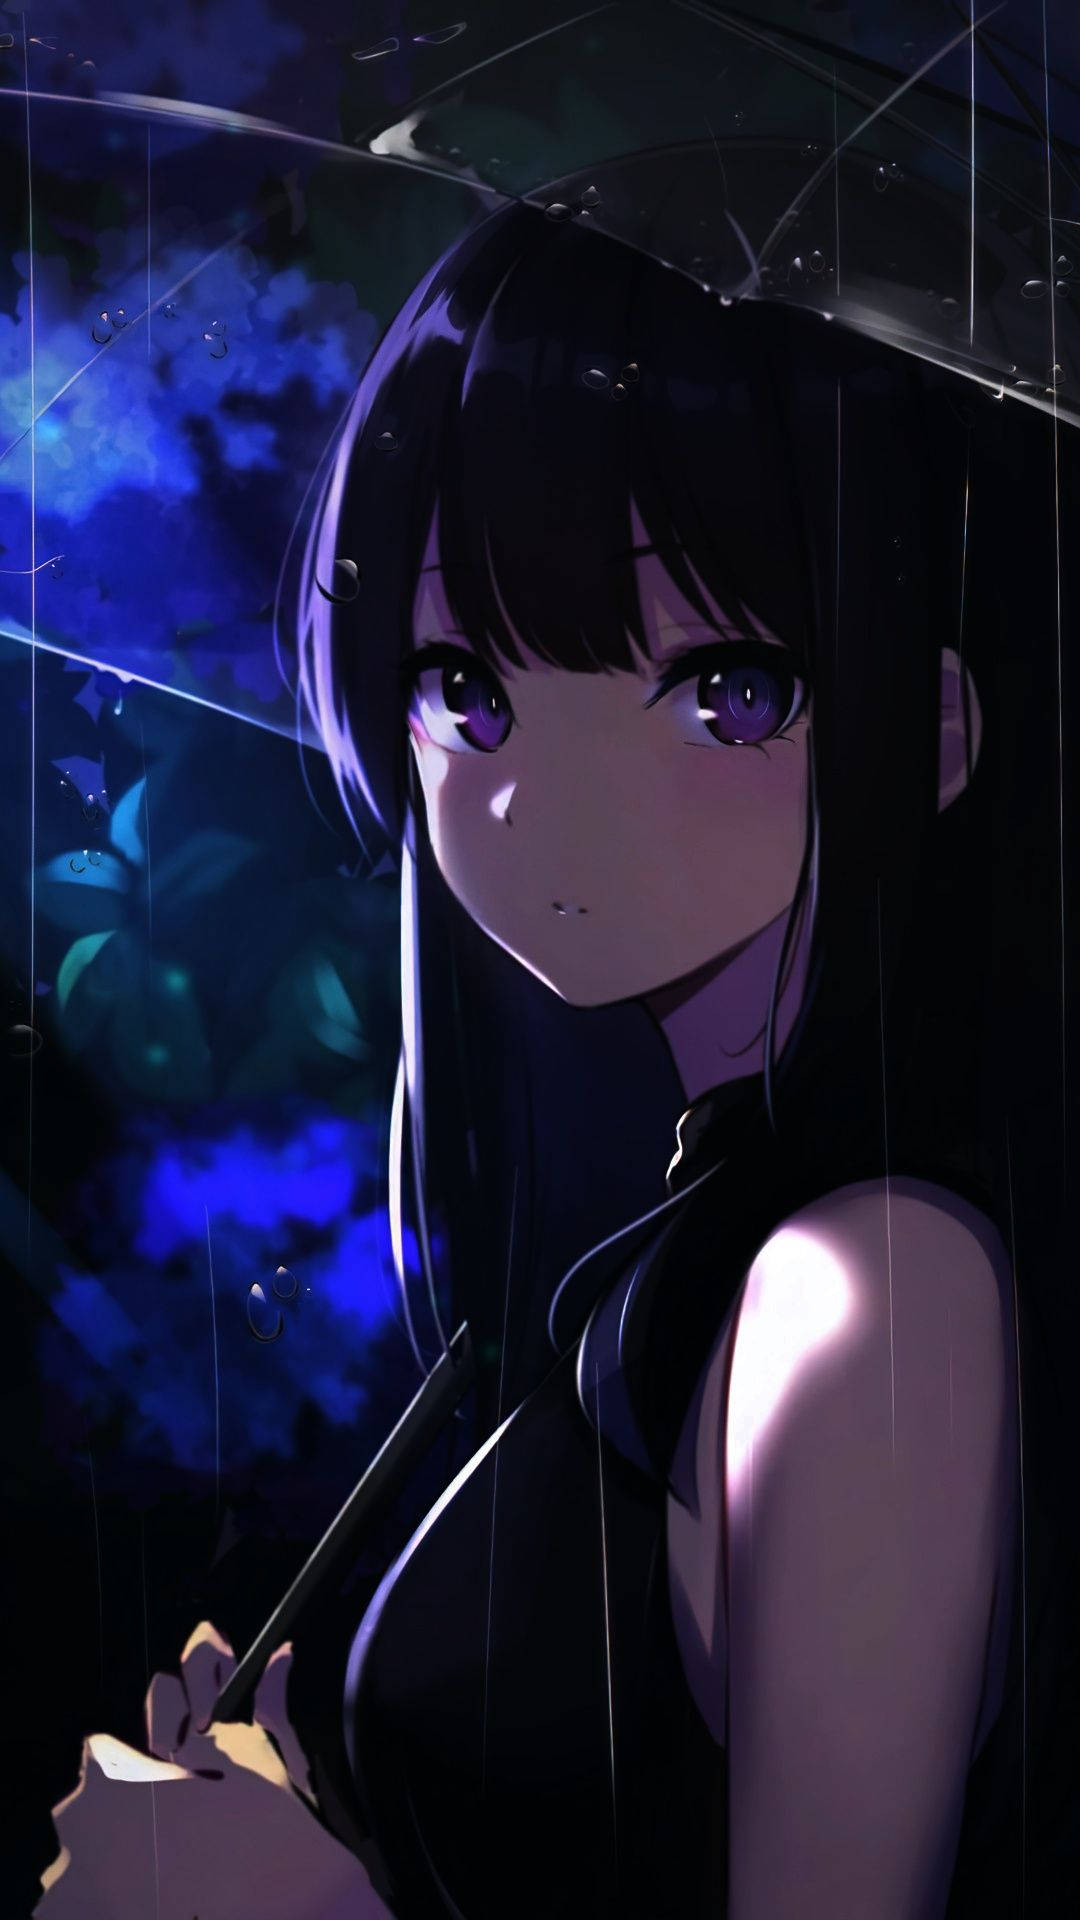 Cool Anime Phone Girl Under Transparent Umbrella Wallpaper